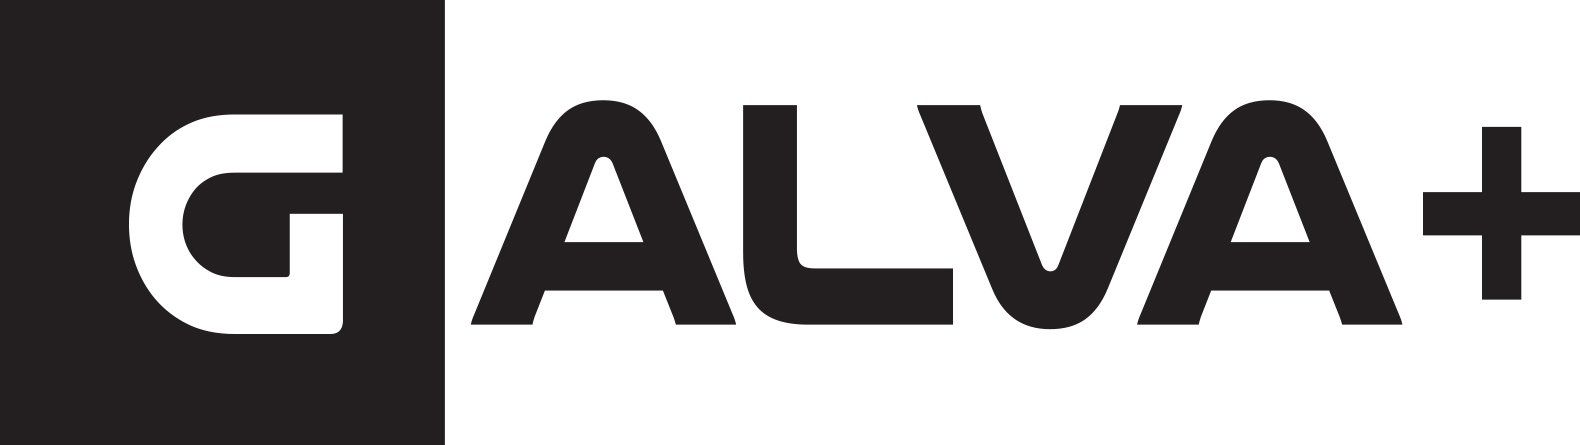 Logo Galva +